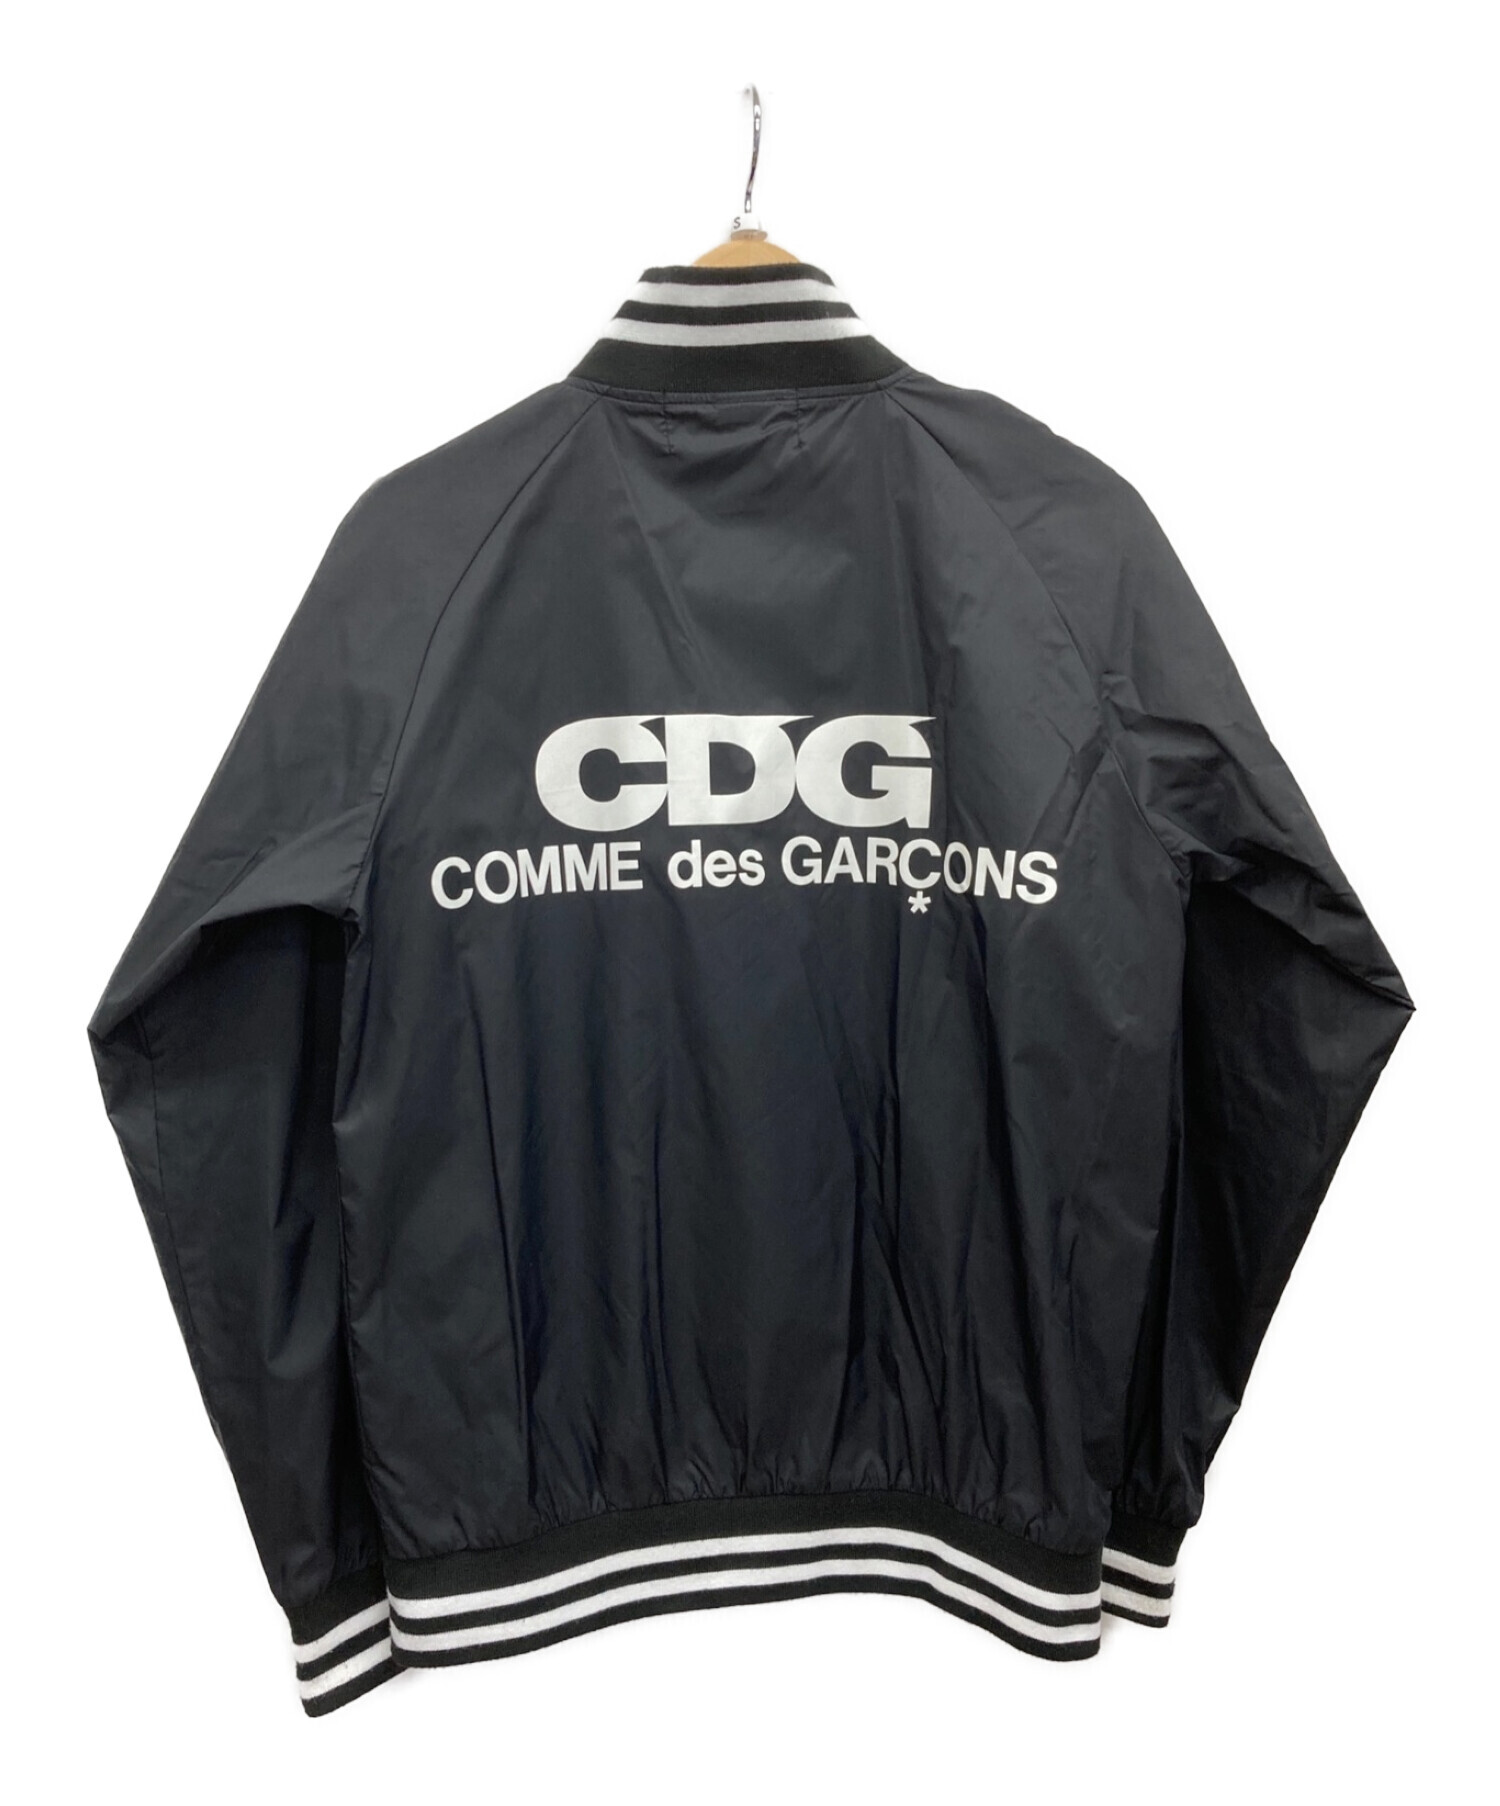 COMME des GARCONS CDG ナイロンジャケット 新品未使用ドメブラ